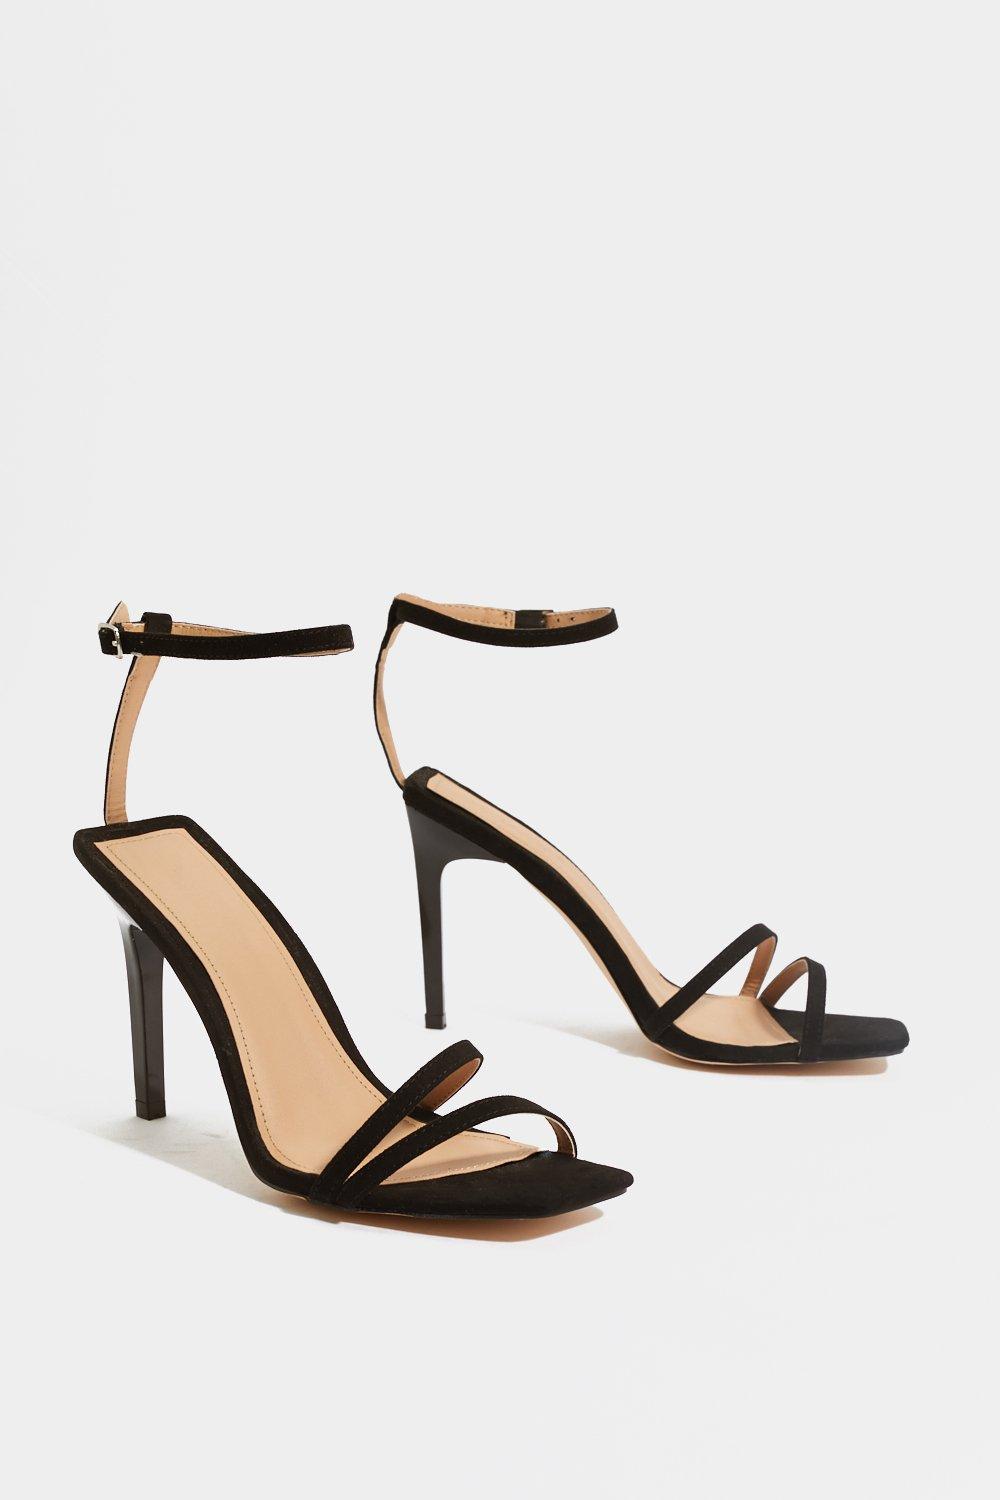 square stiletto heels